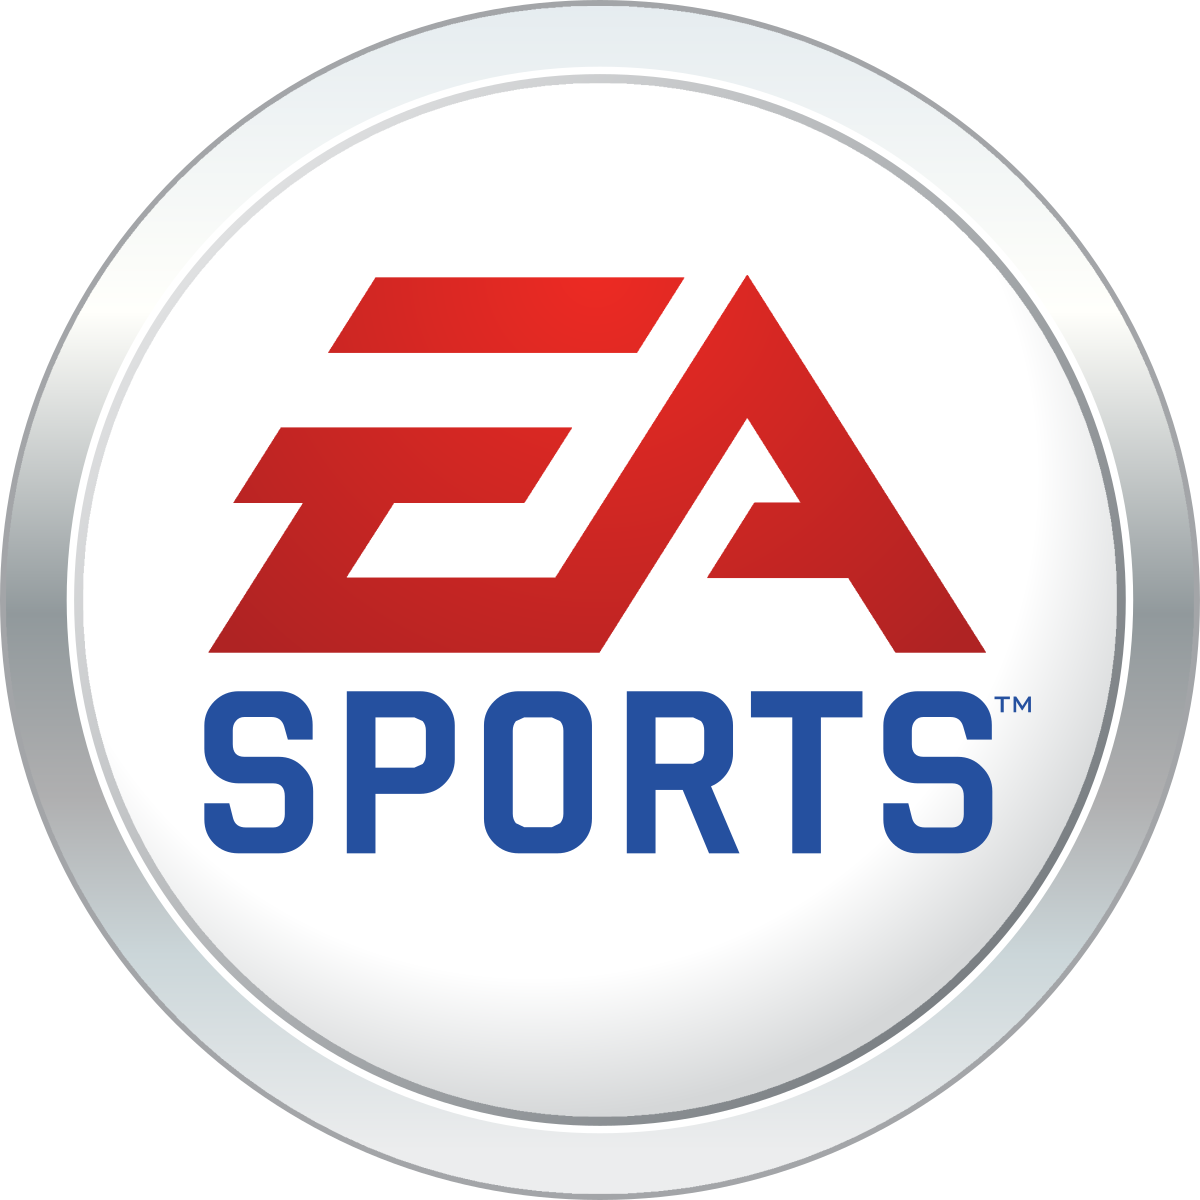 EA Sports - Wikipedia